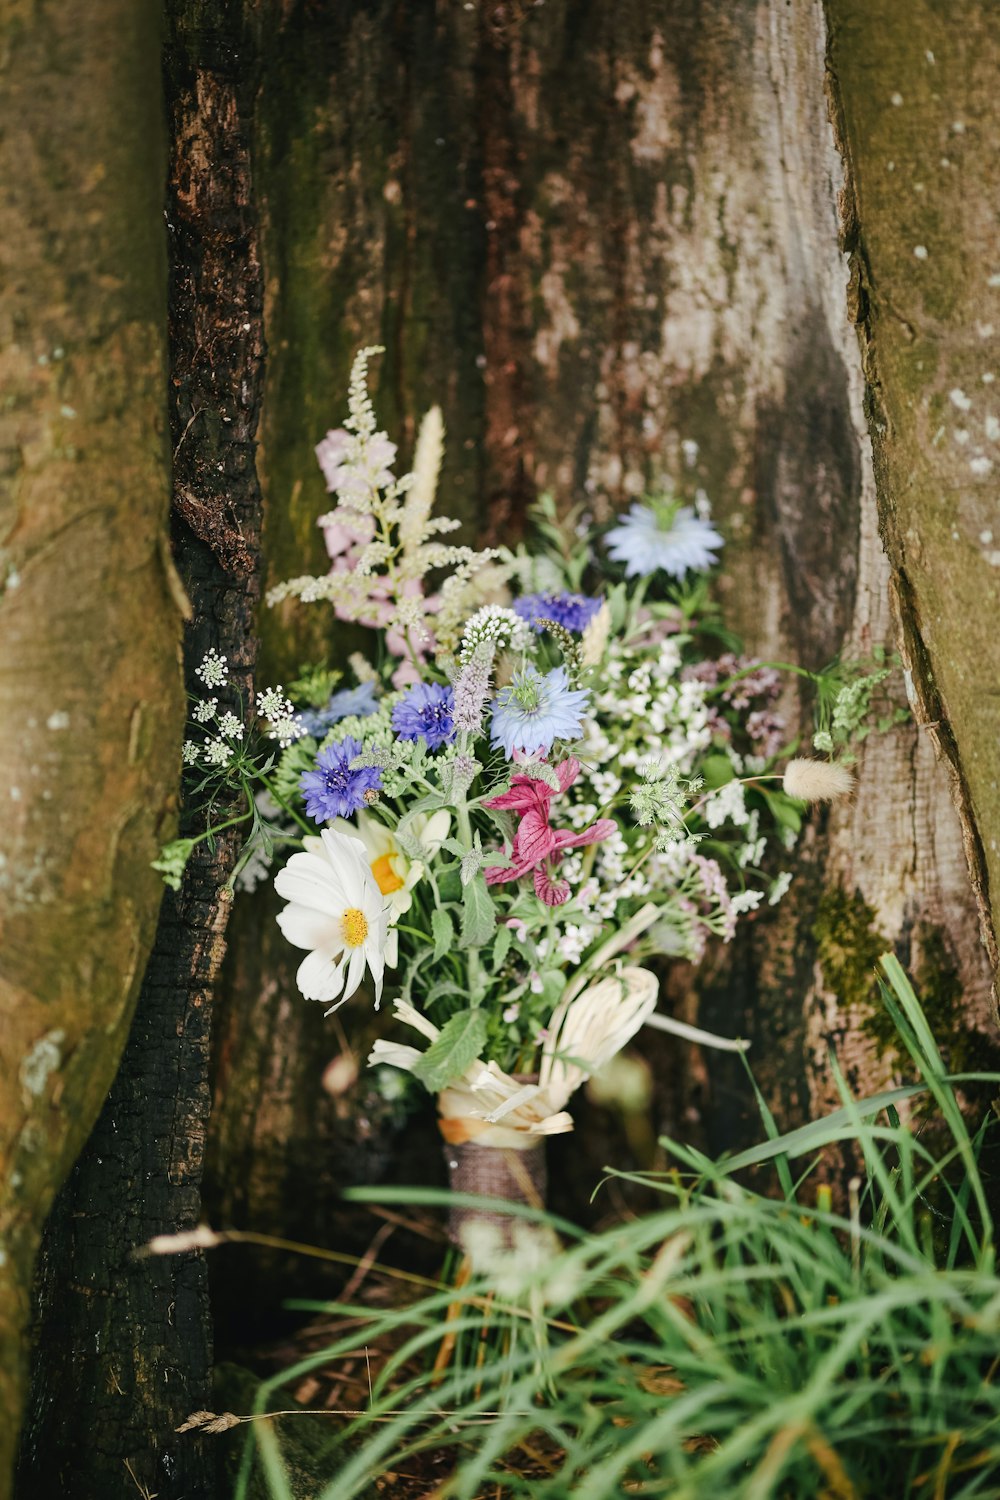 flower arrangement near brown tree trunk